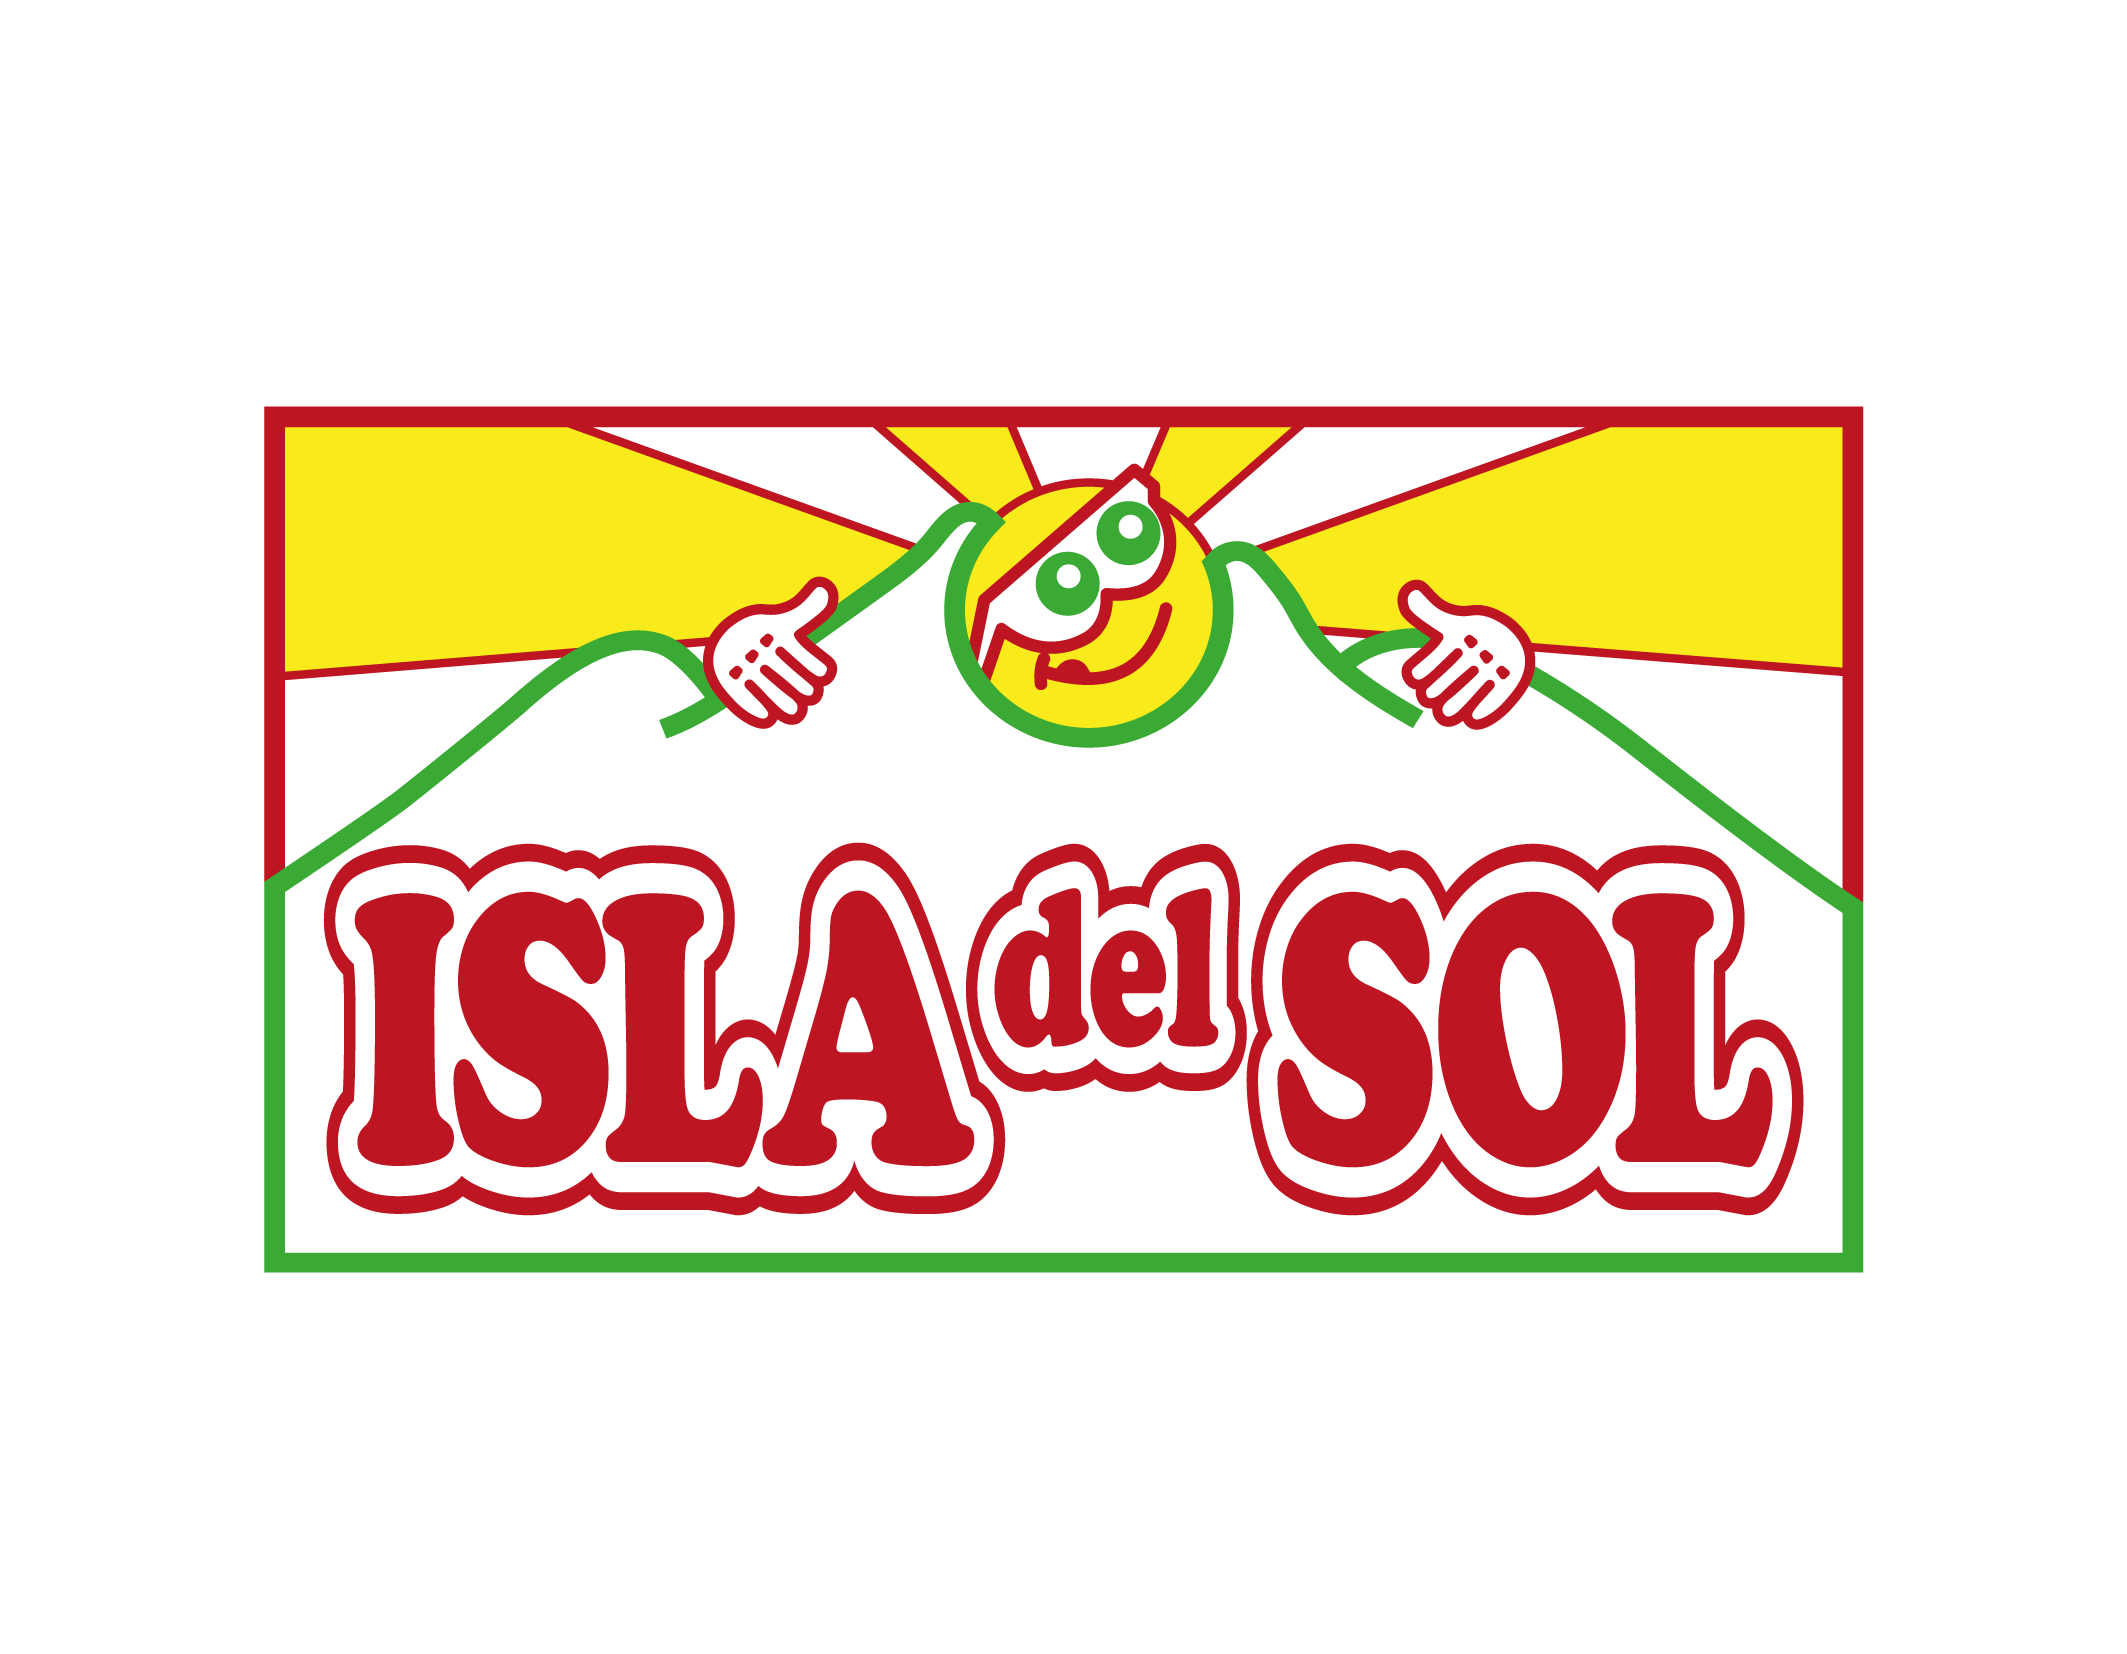 Isla del Sol